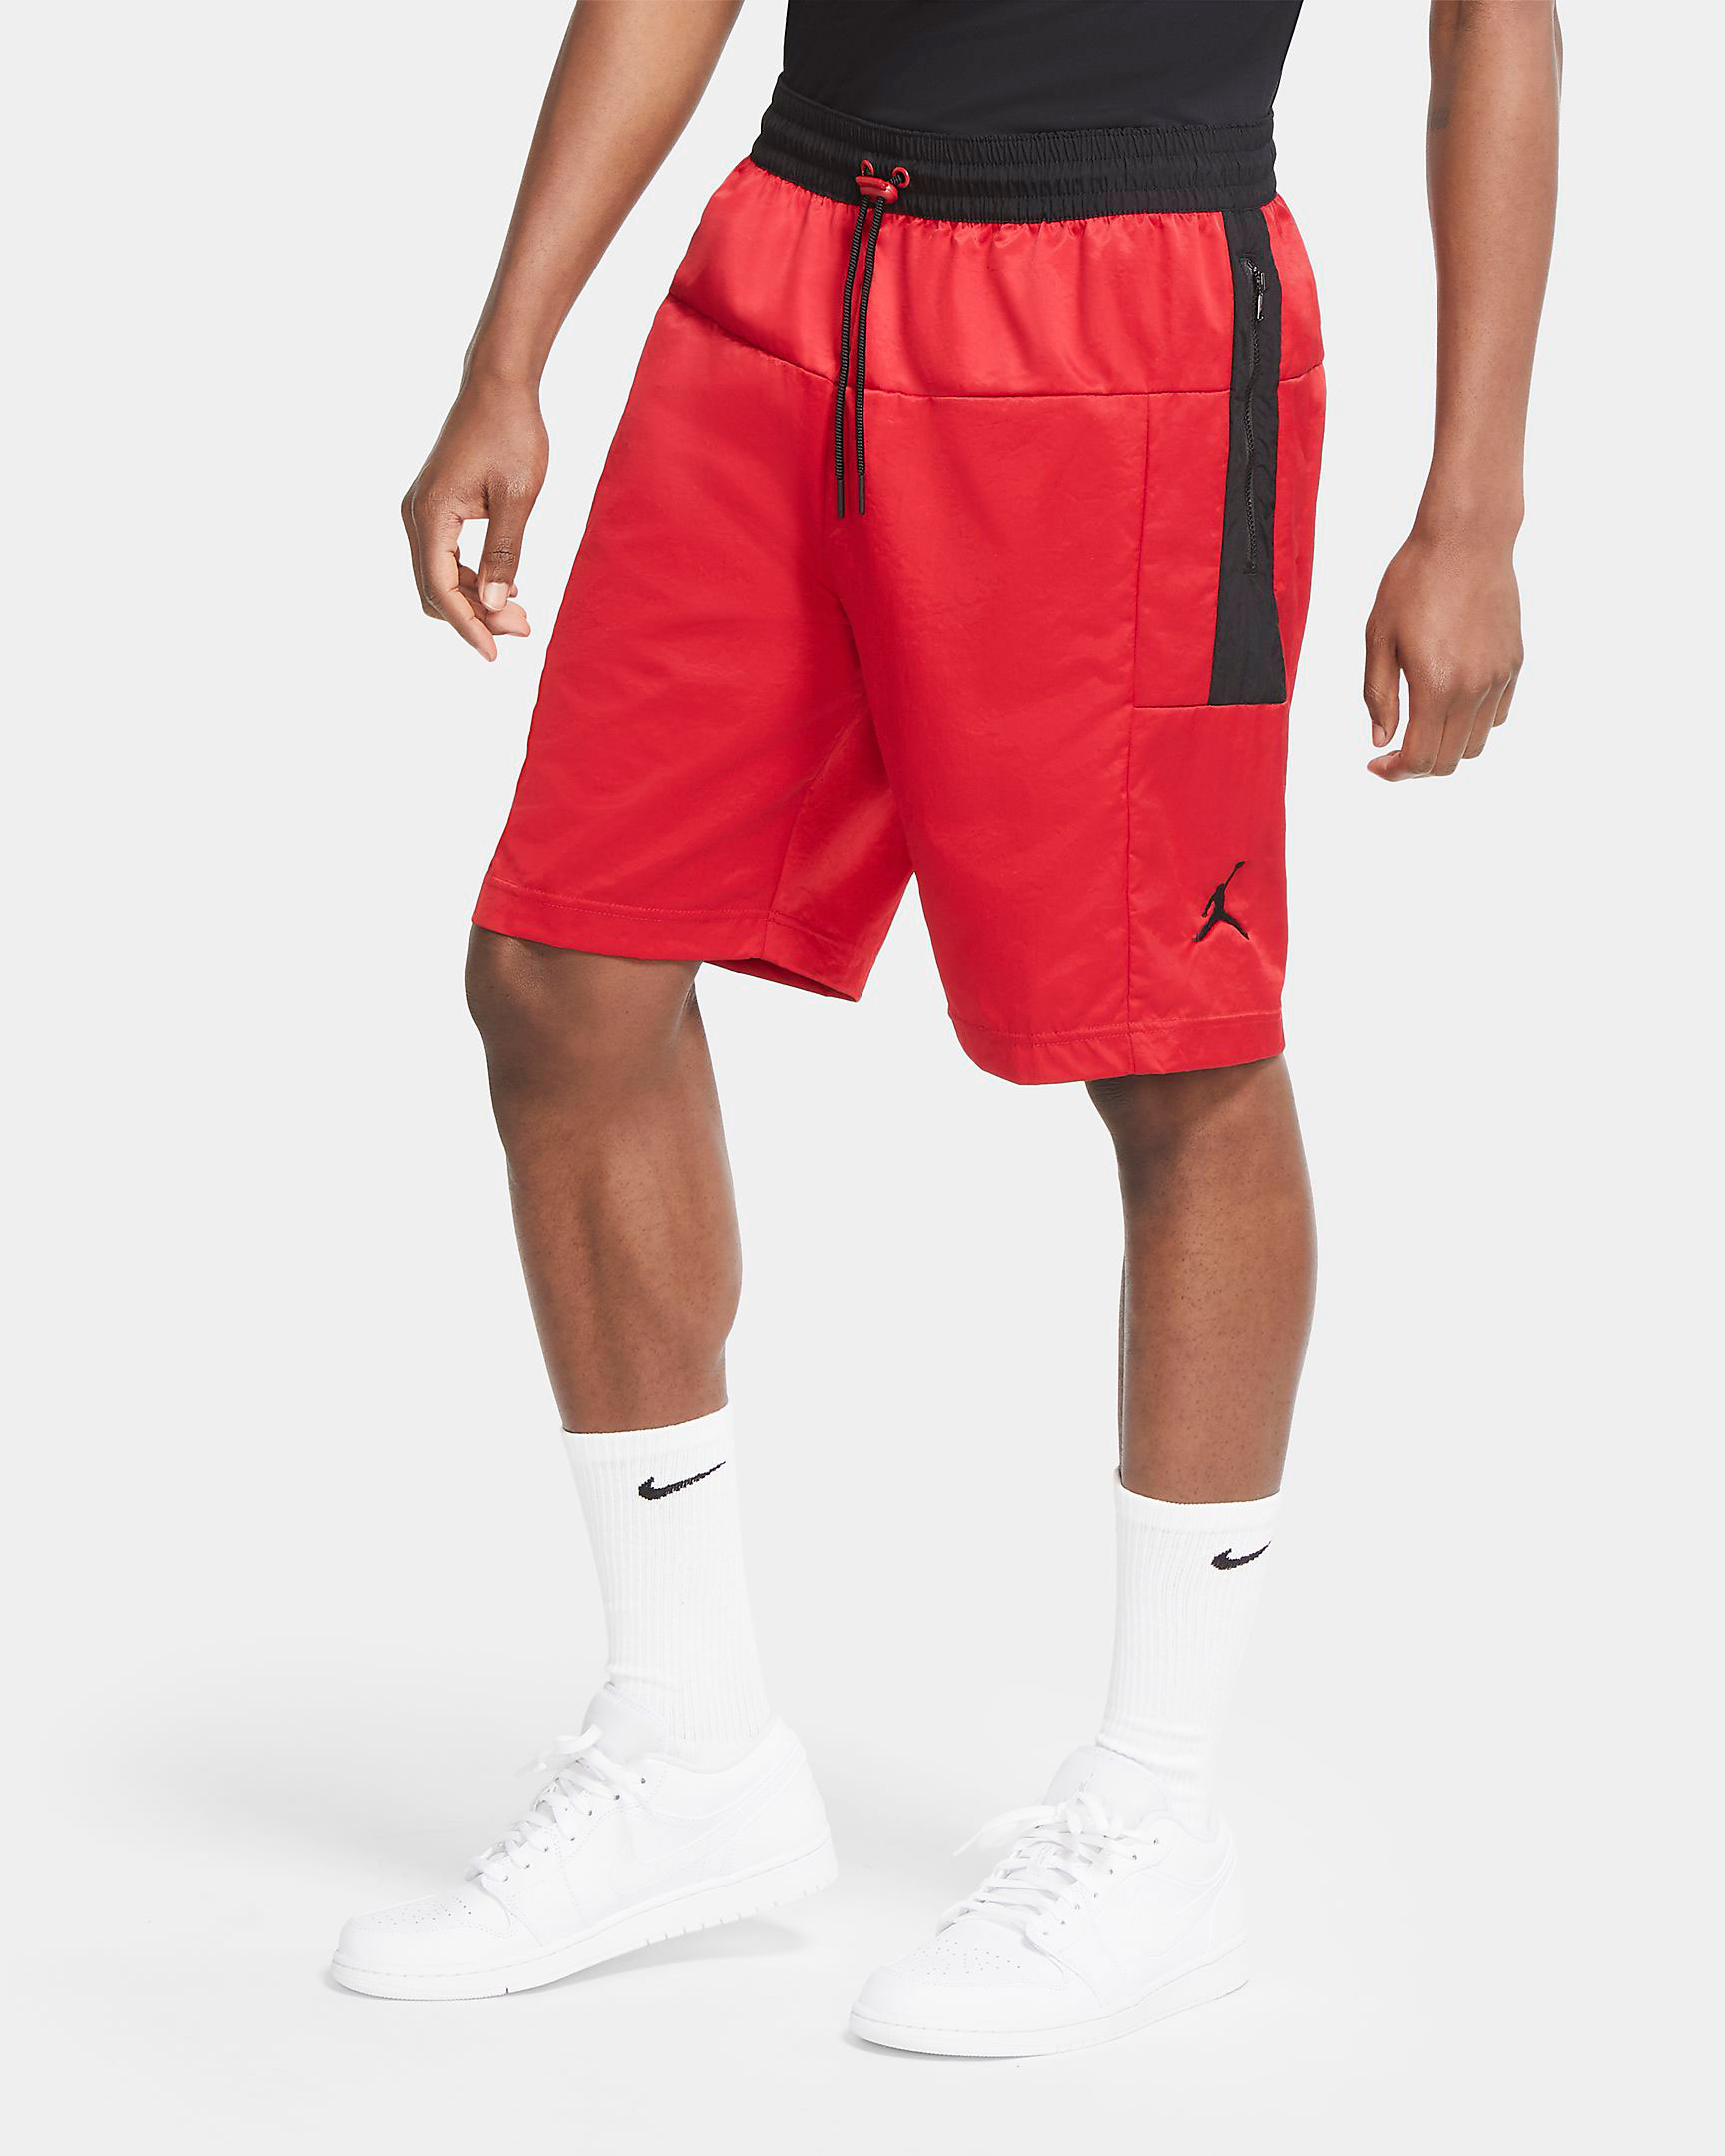 jordan shorts black red